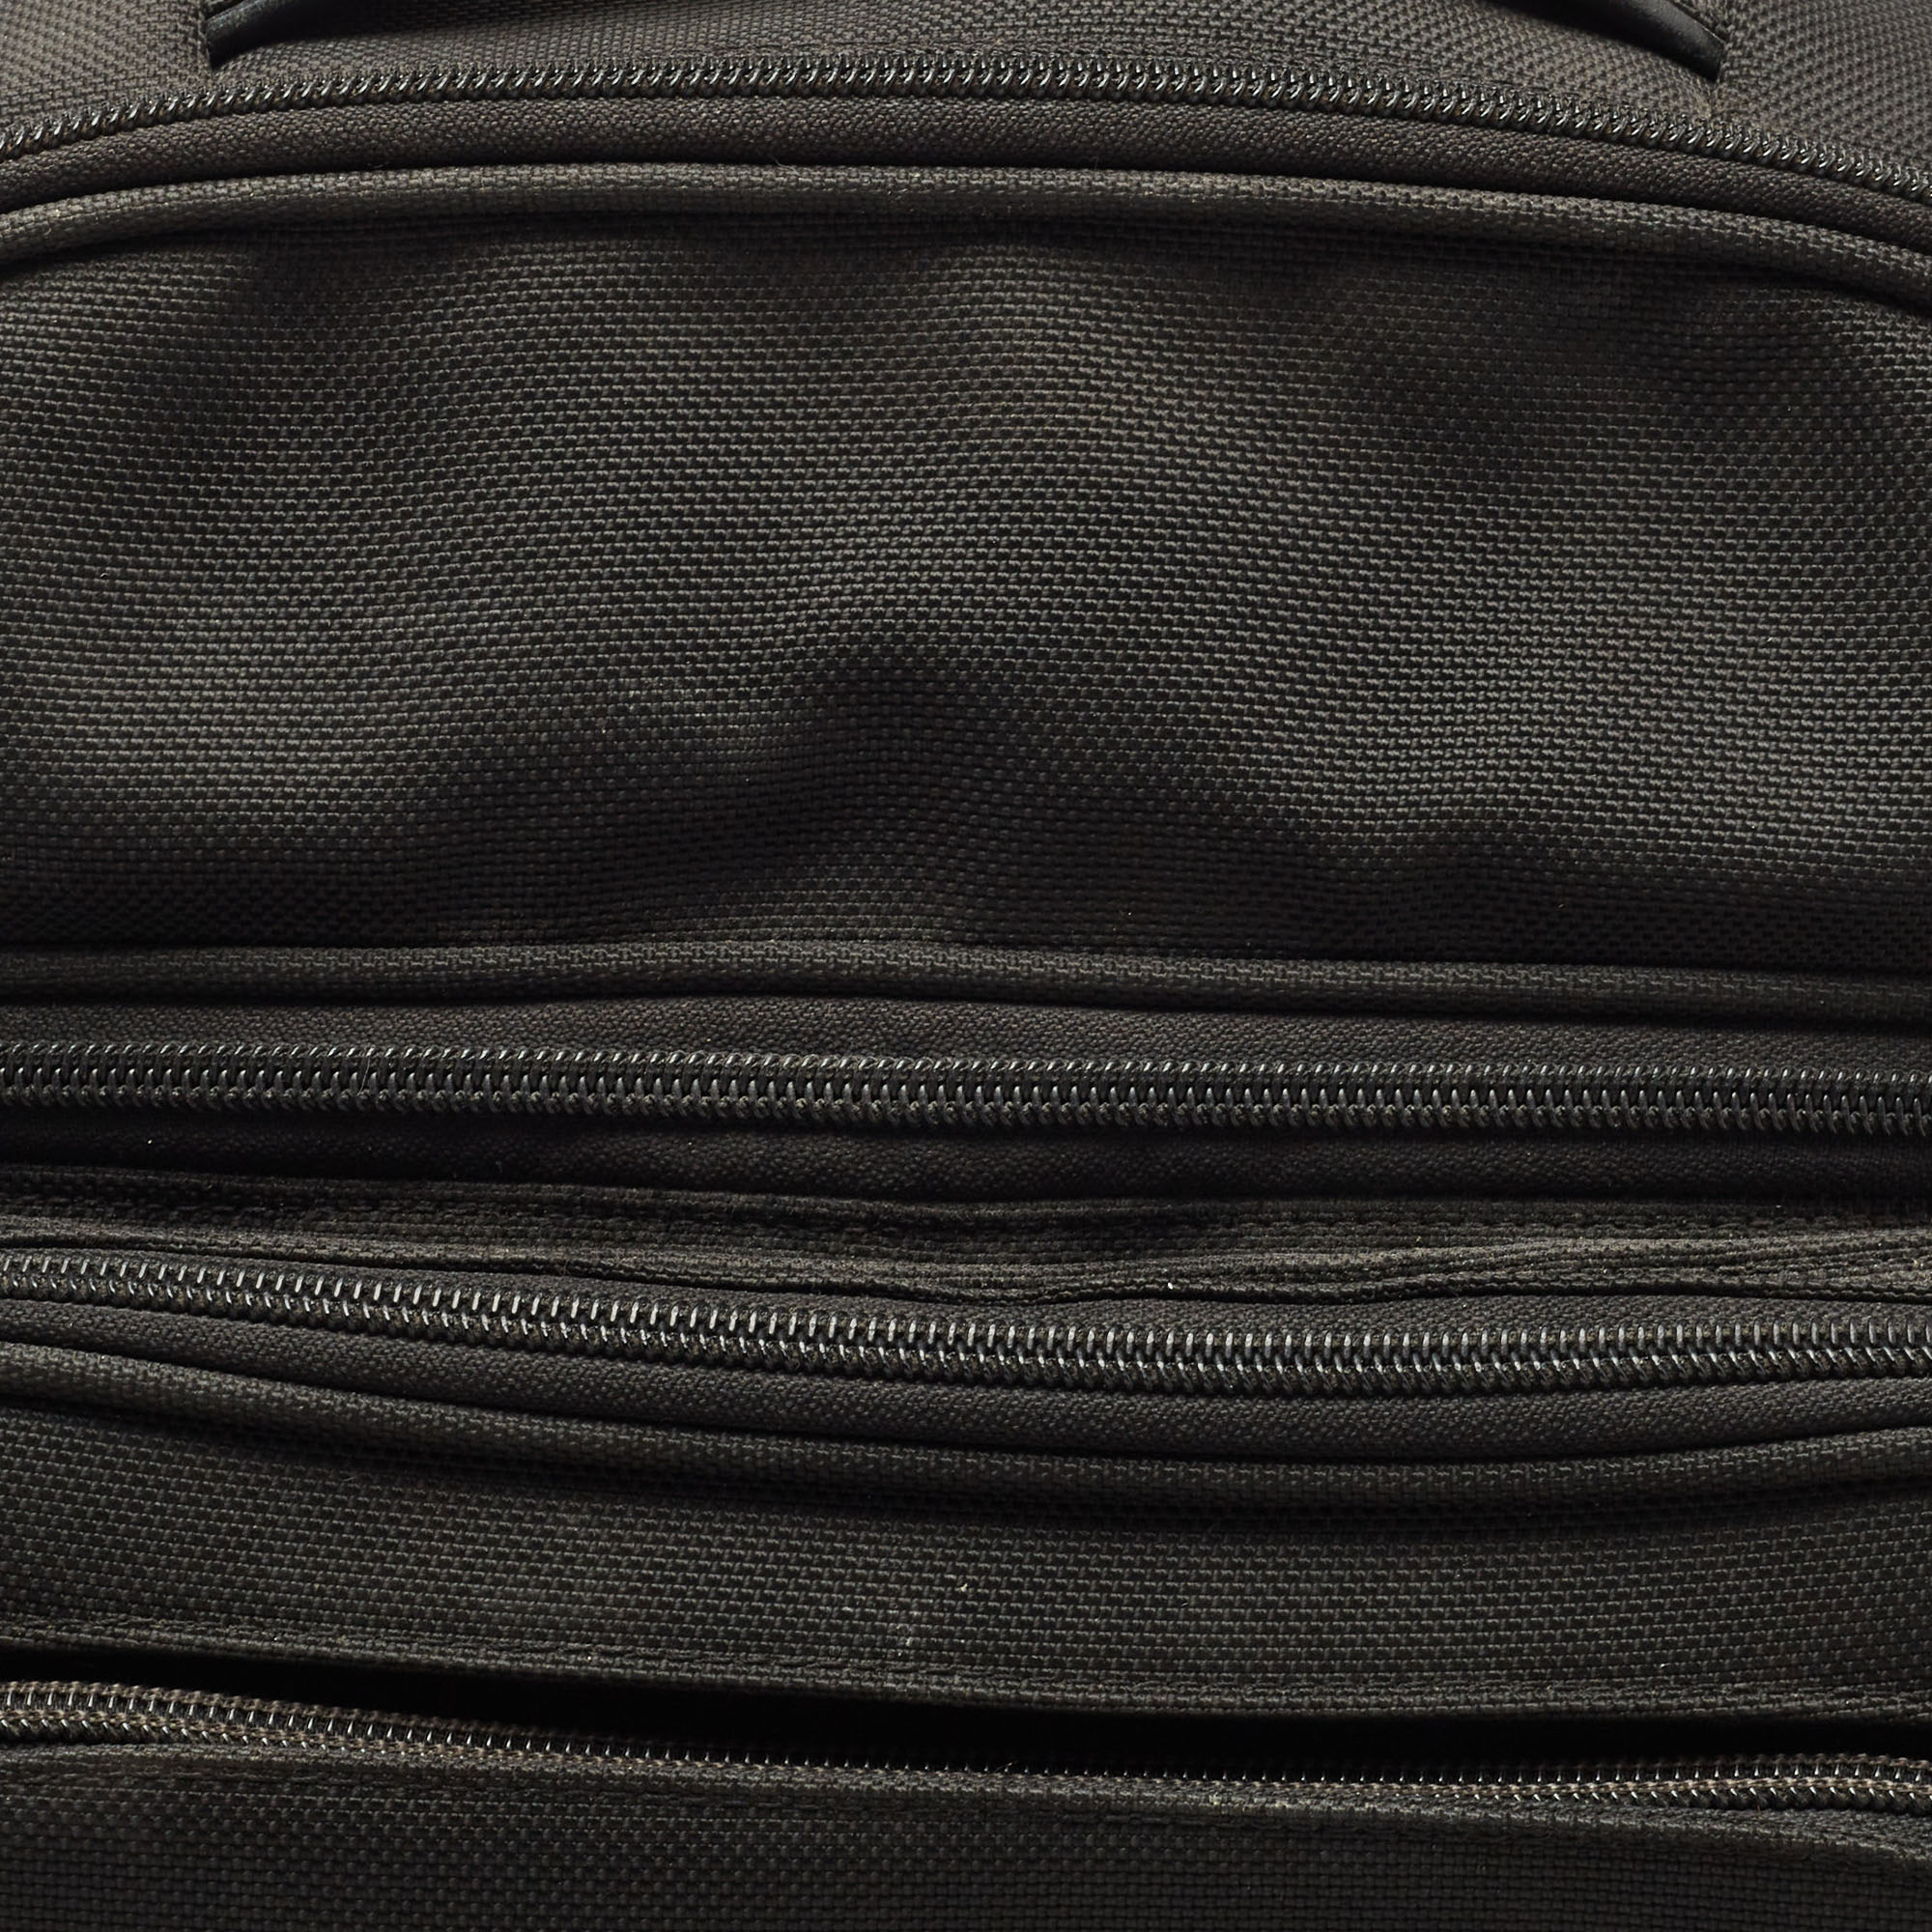 TUMI Black Nylon Backpack